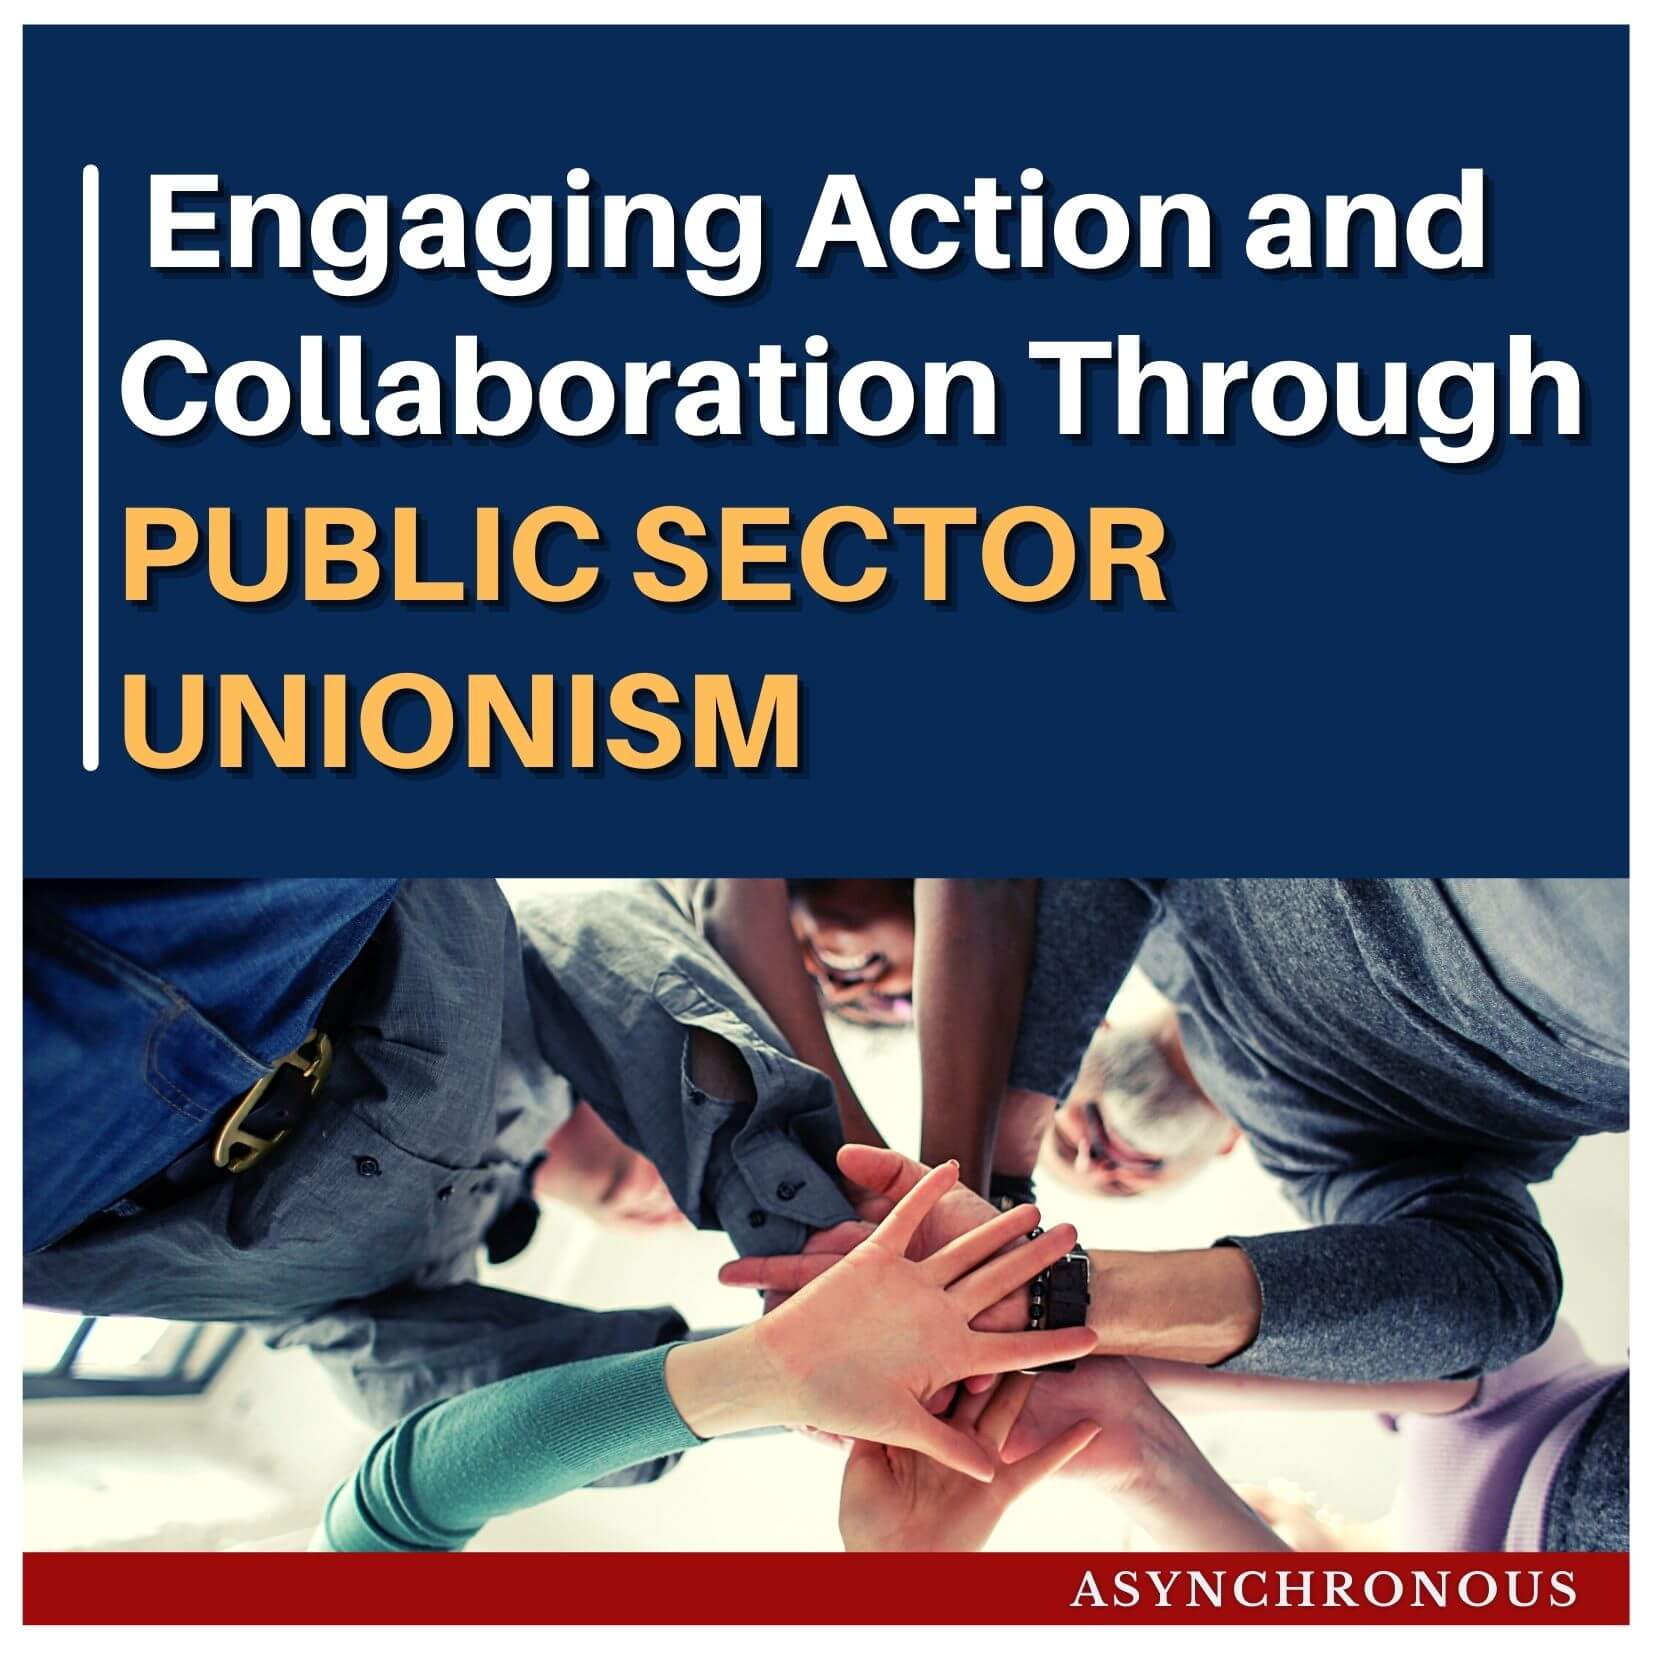 Public Sector Unionism (PSU)